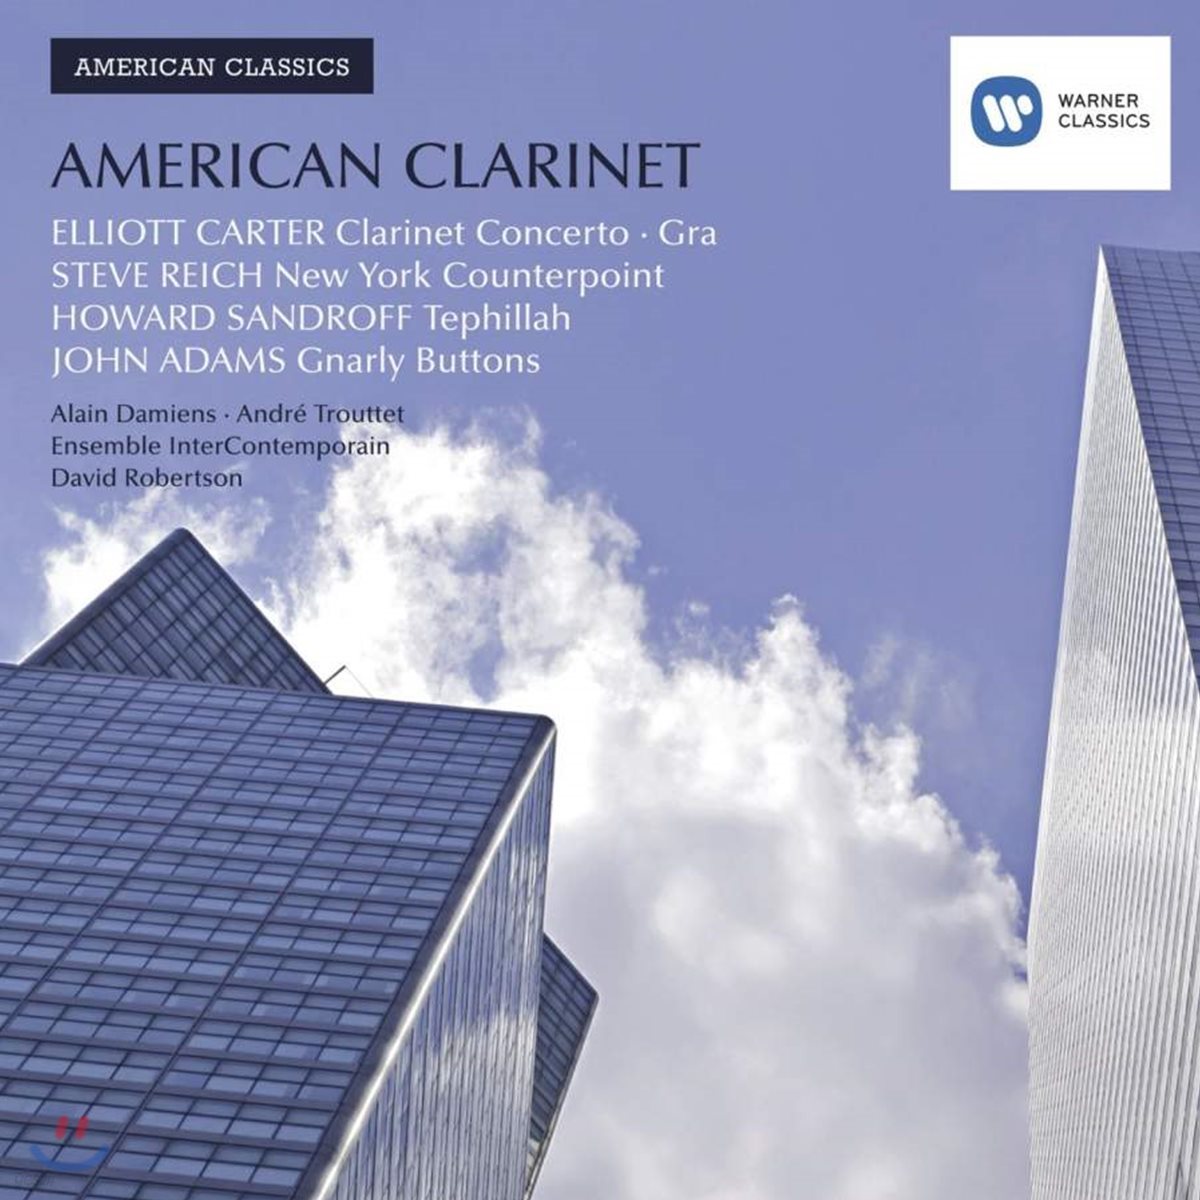 Alain Damiens / Franck Rossi미국의 클라리넷 음악 - 엘리엇 카터 / 스티브 라이 / 존 아담스 (American Clarinet)